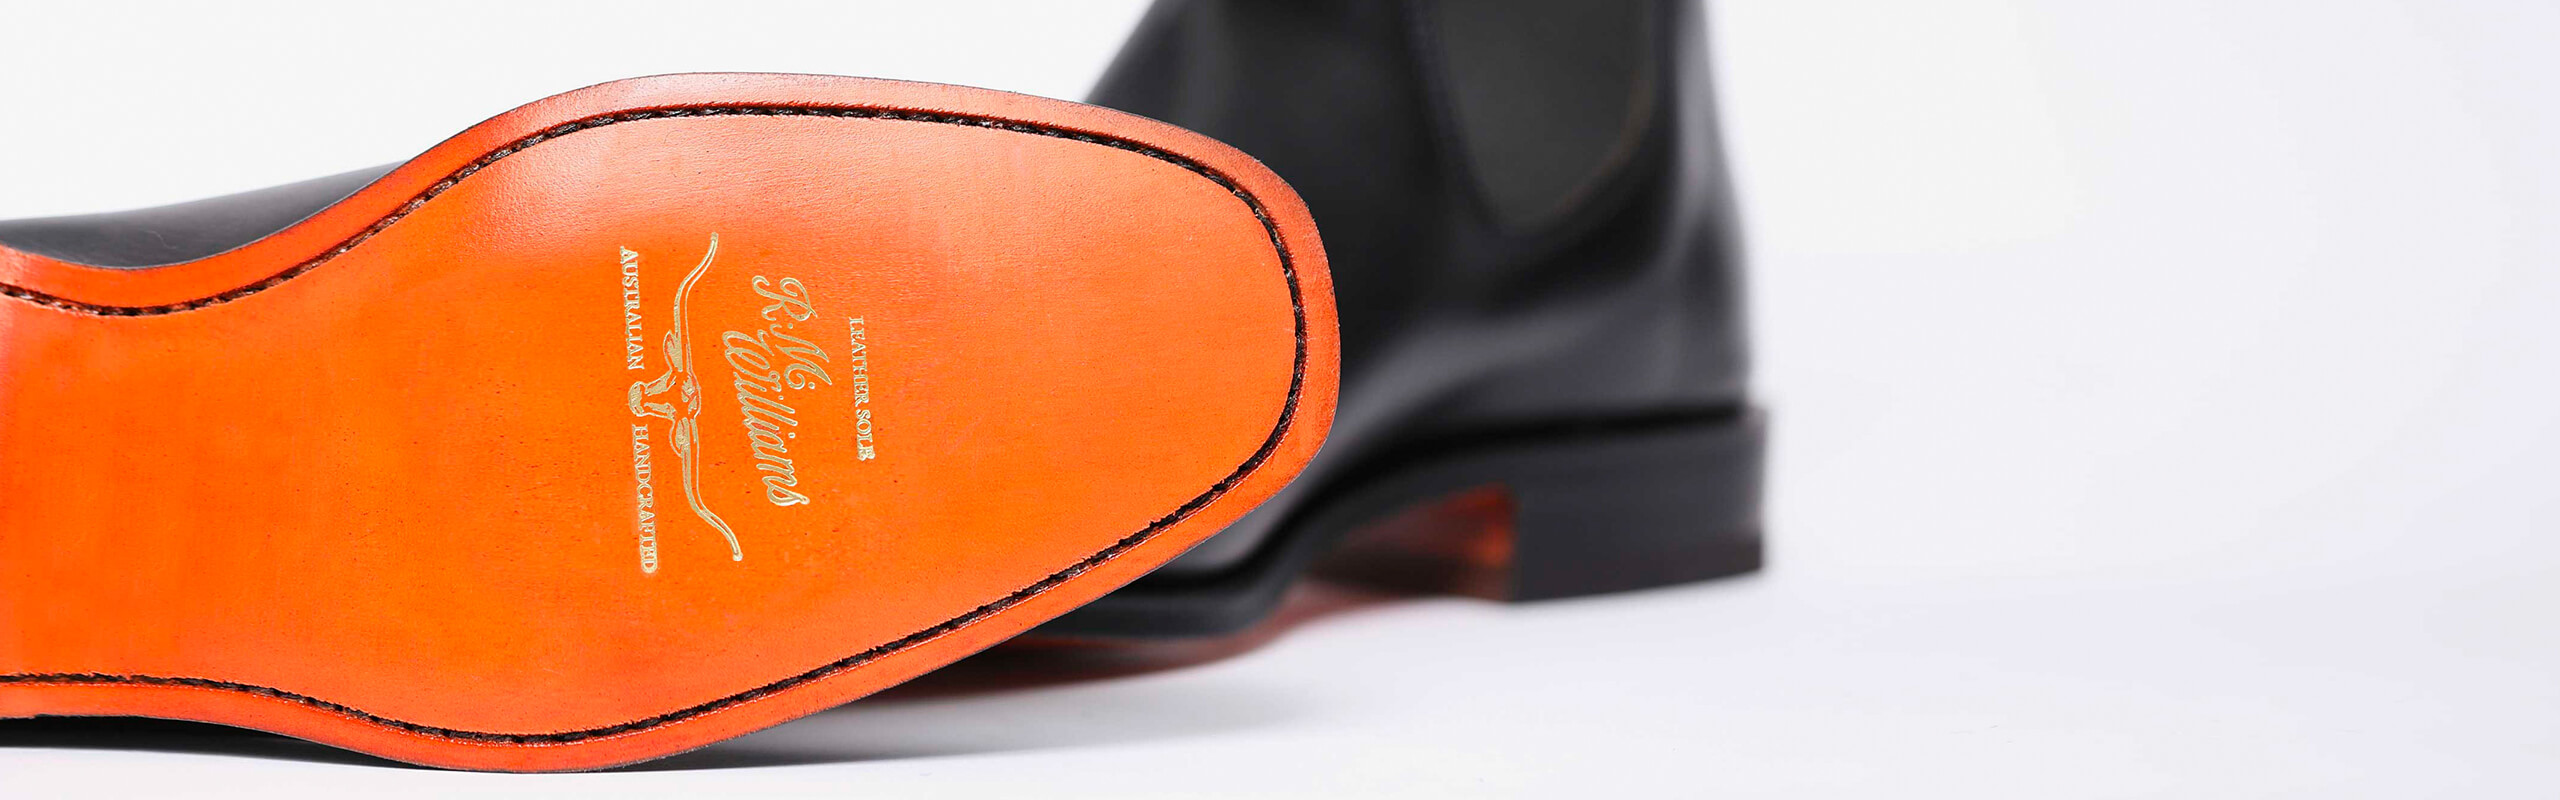 R.M.Williams Craftsman leather sole